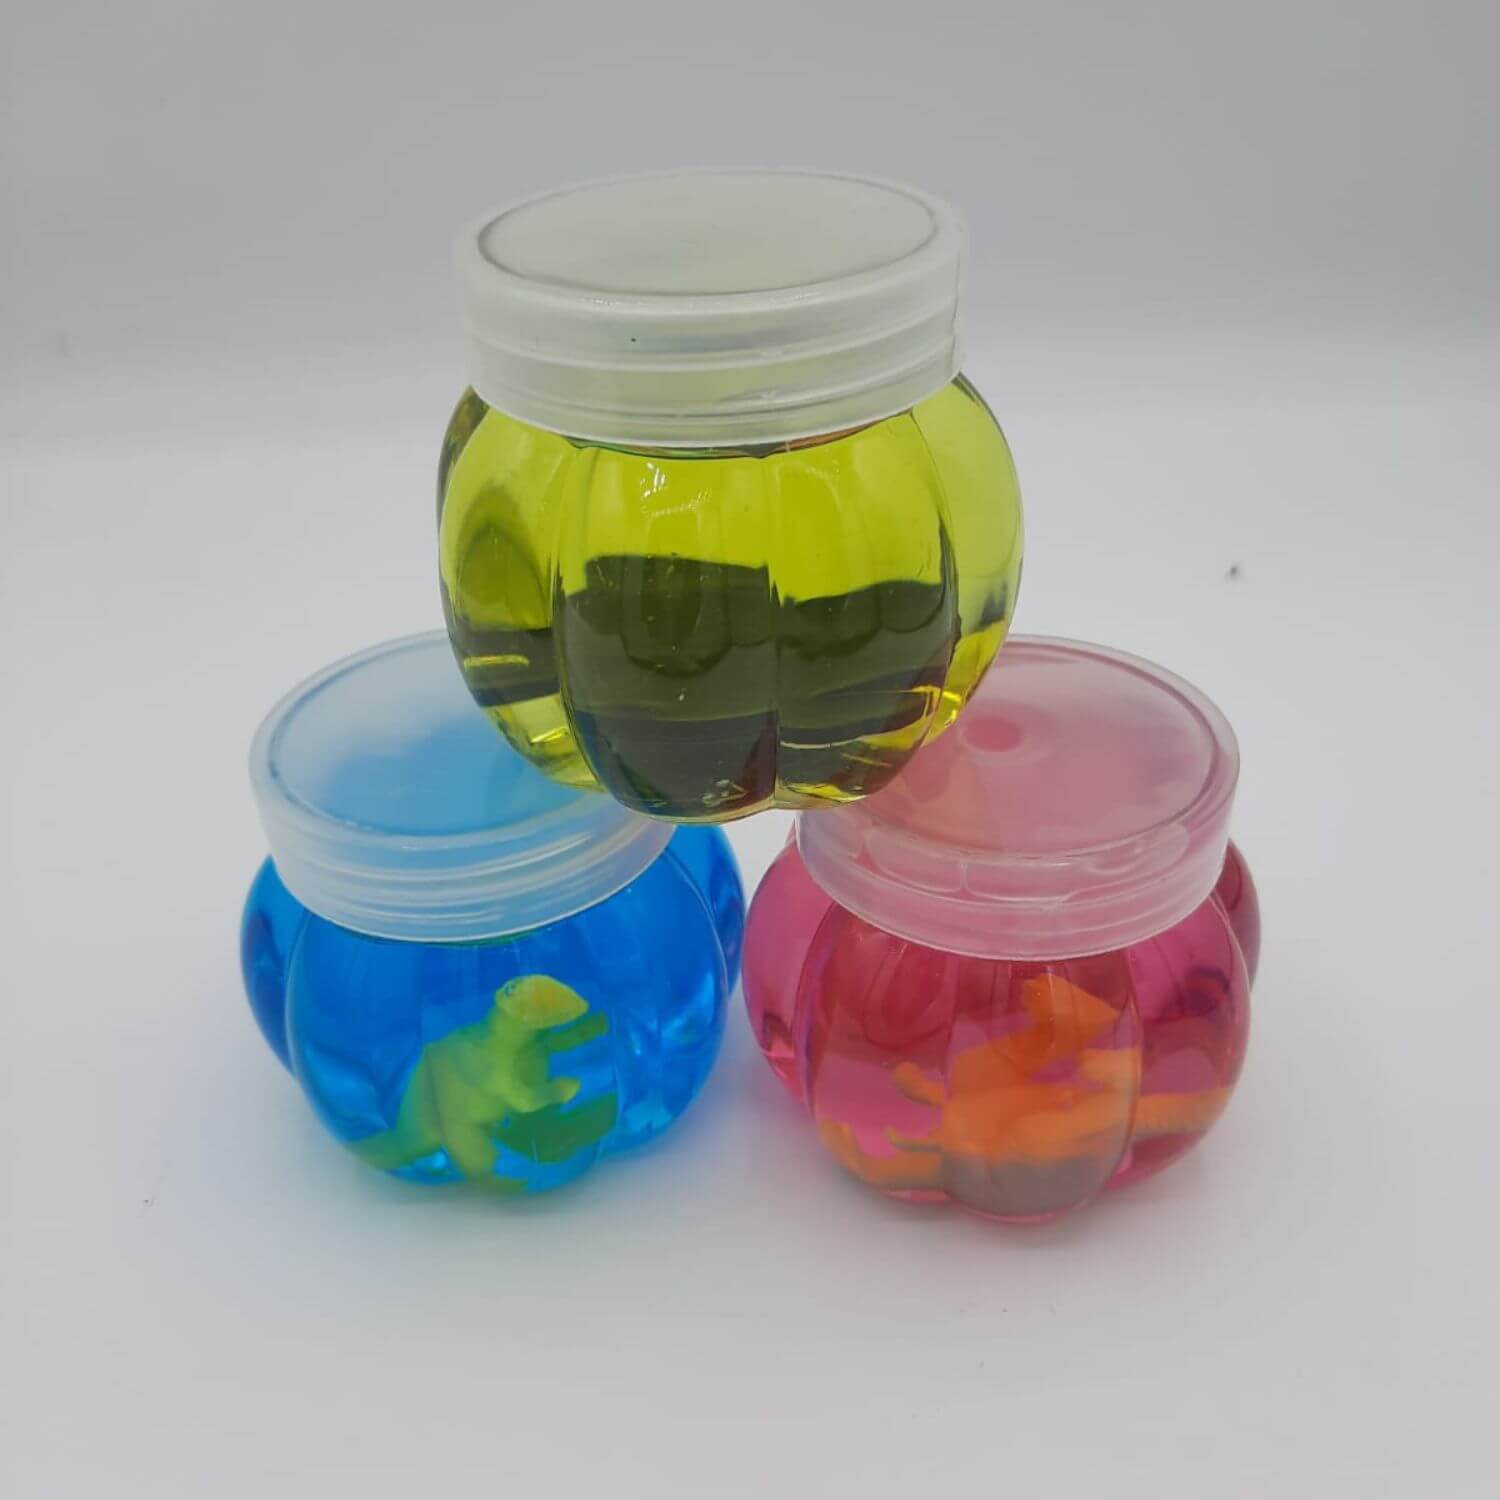 Toy jelliy slime